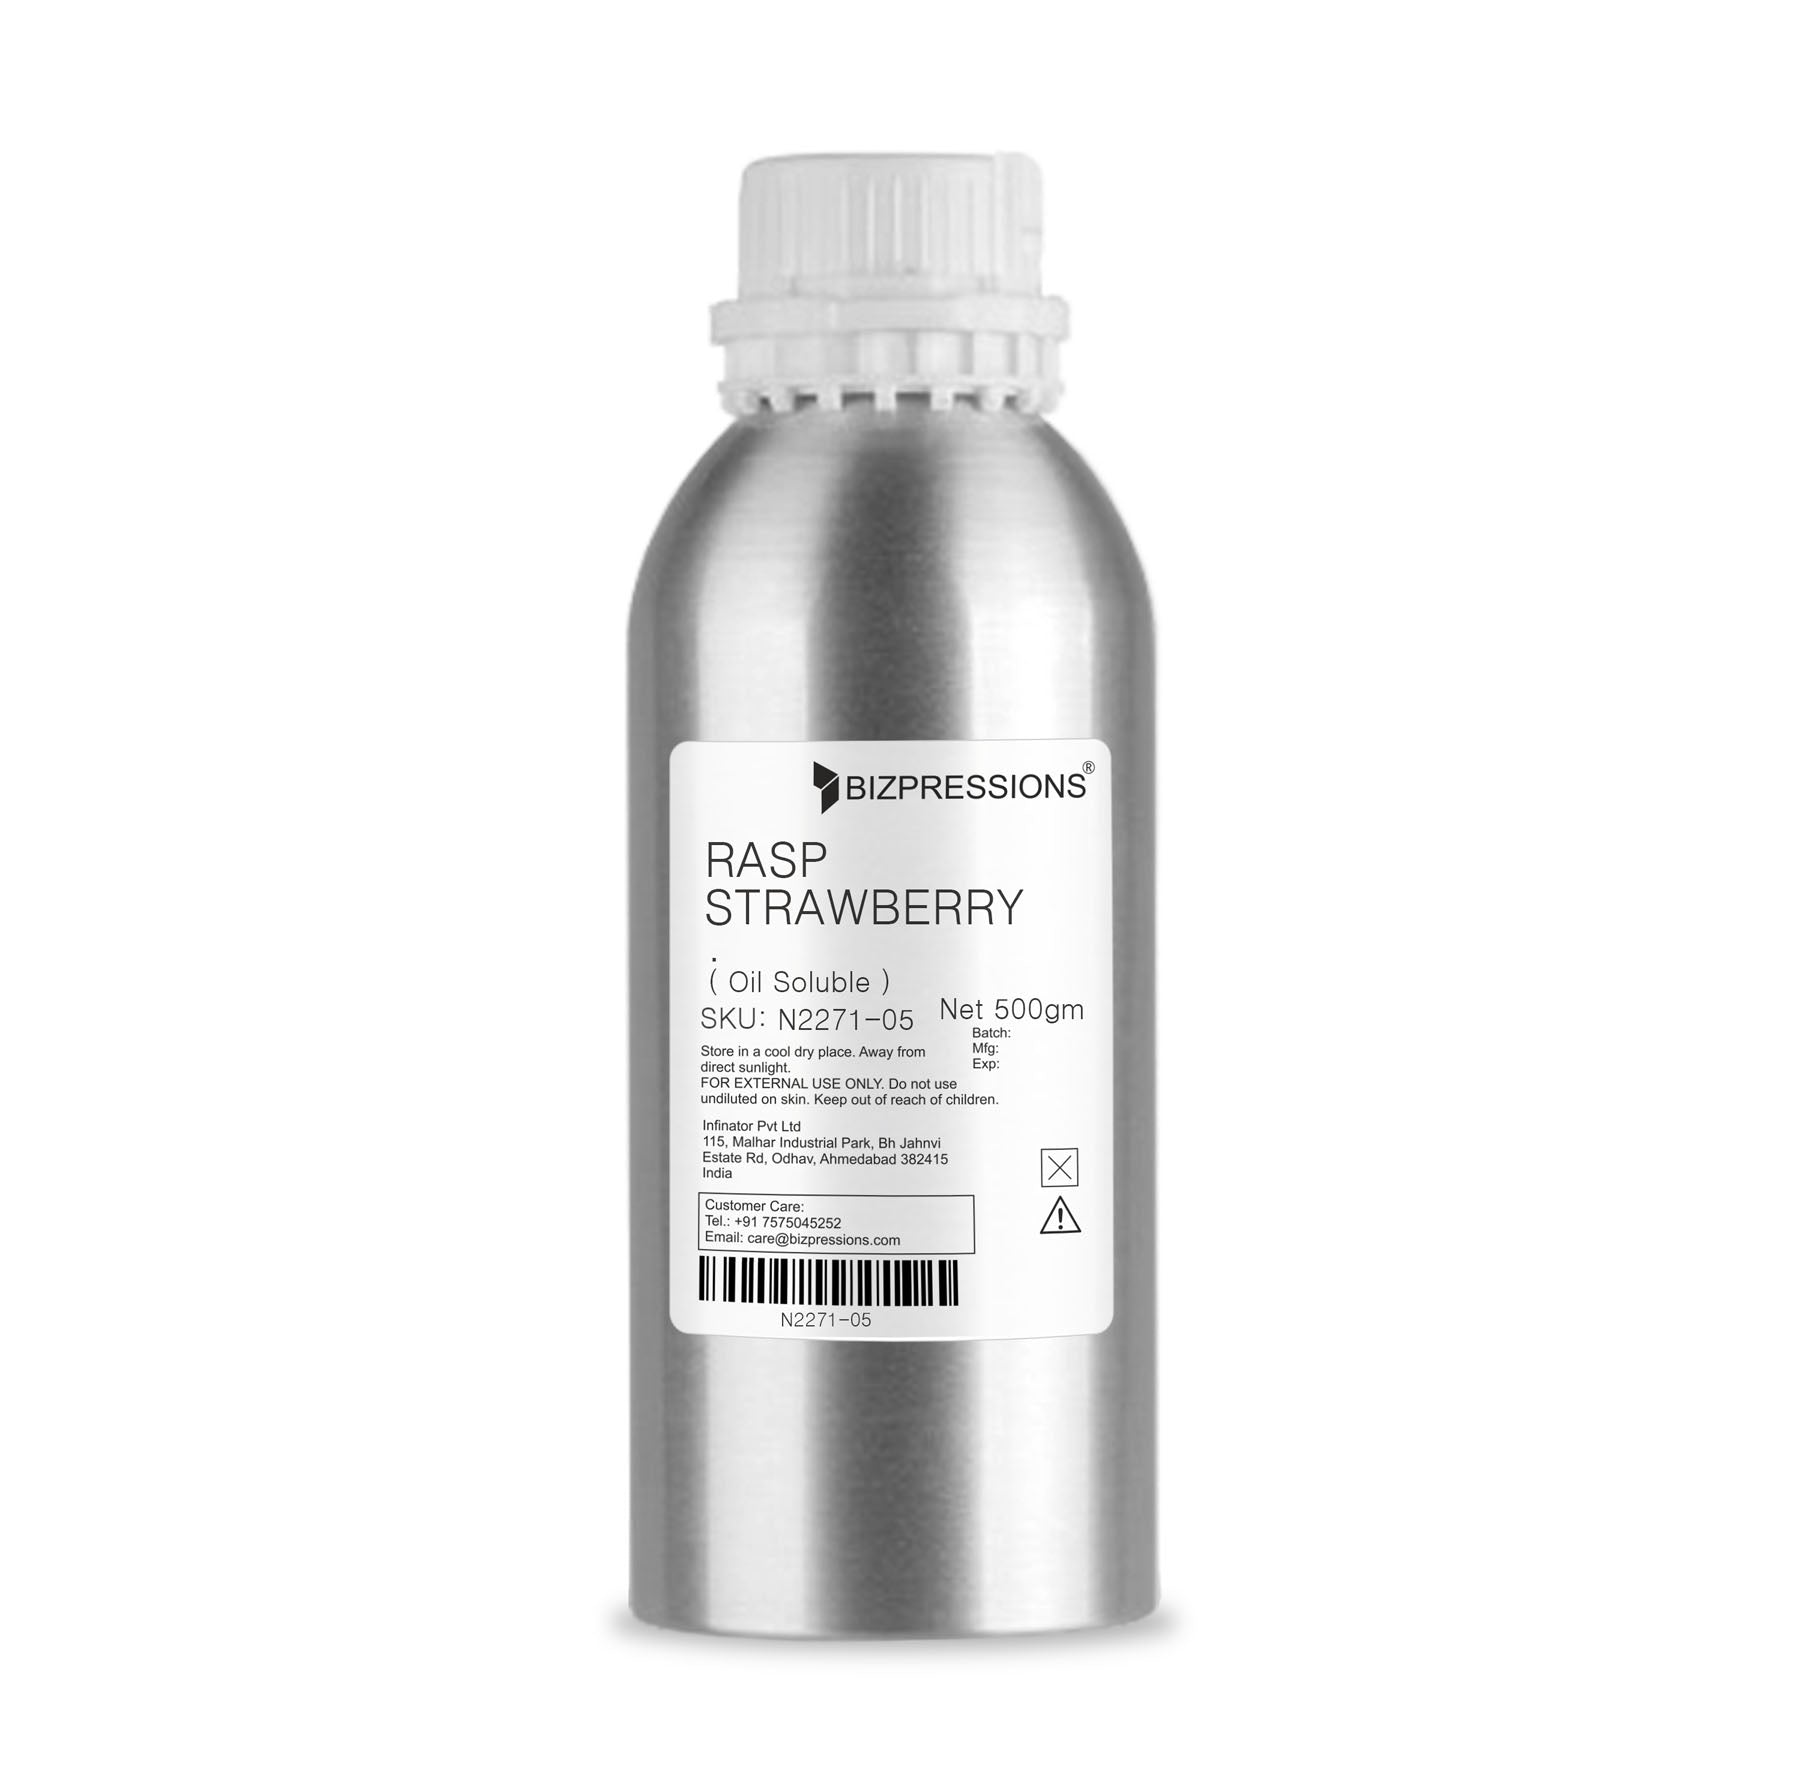 RASP STRAWBERRY - Fragrance ( Oil Soluble ) - 500 gm